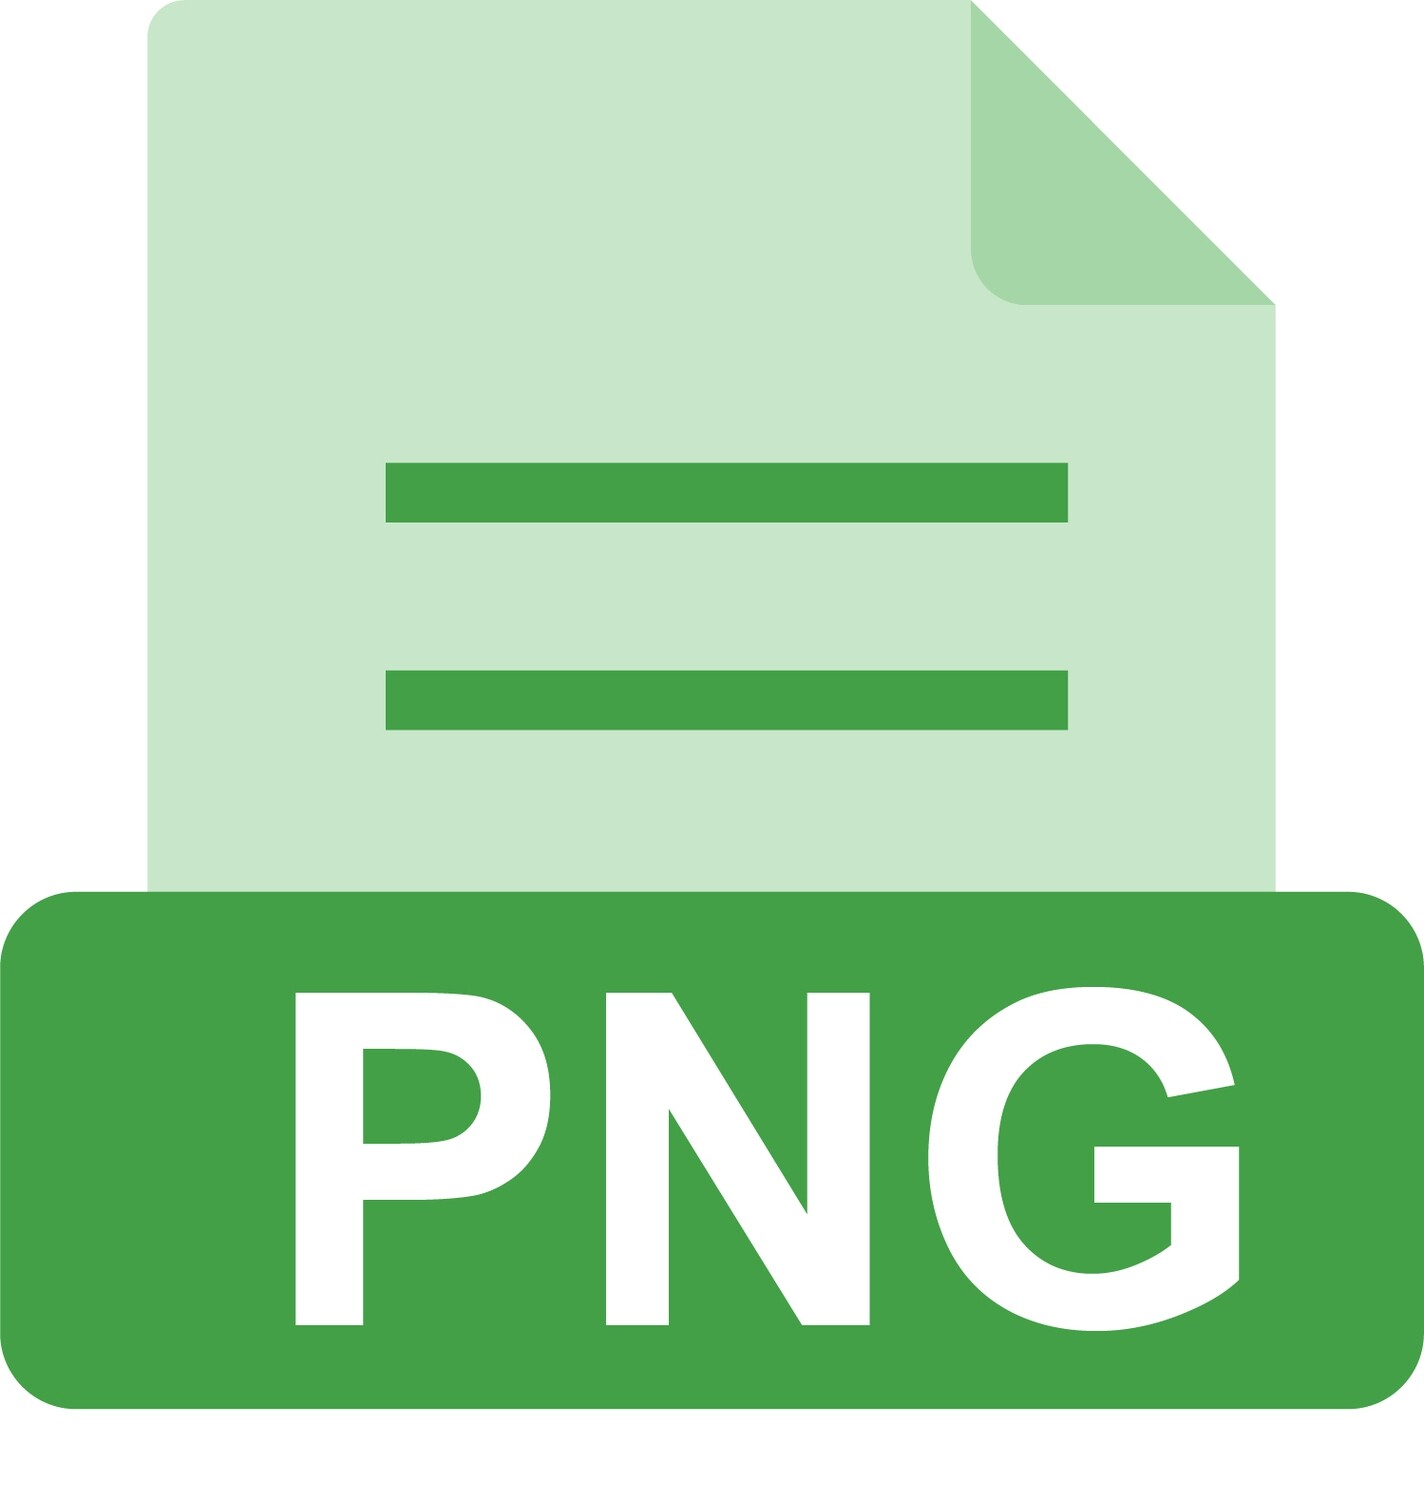 E-File: PNG, PE New Hampshire